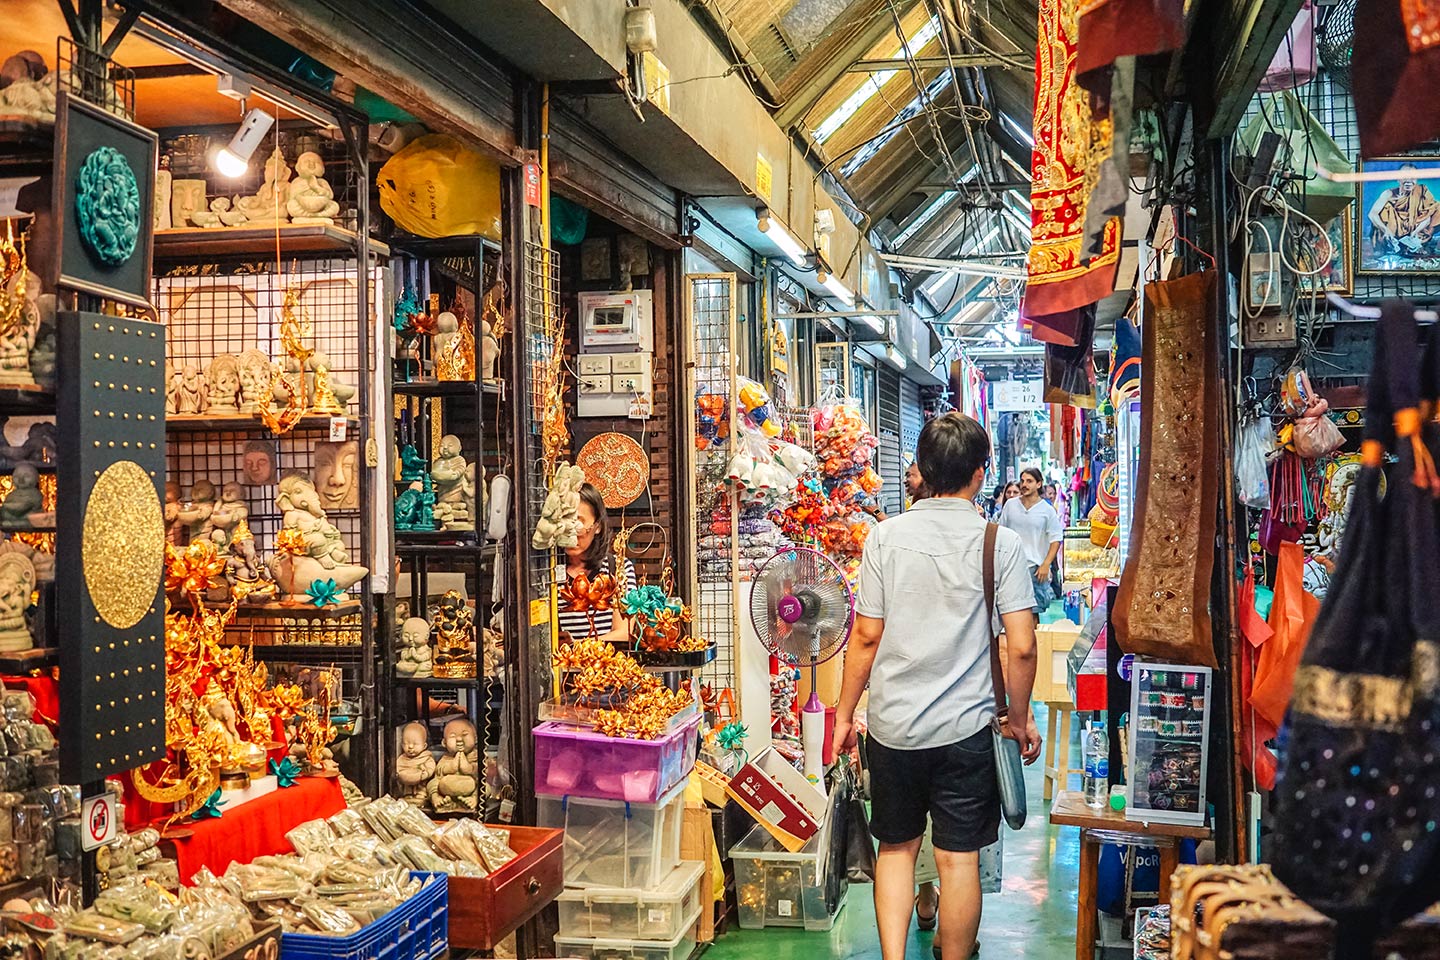 Chatuchak weekendmarkt in Bangkok - the ultimate guide blog post